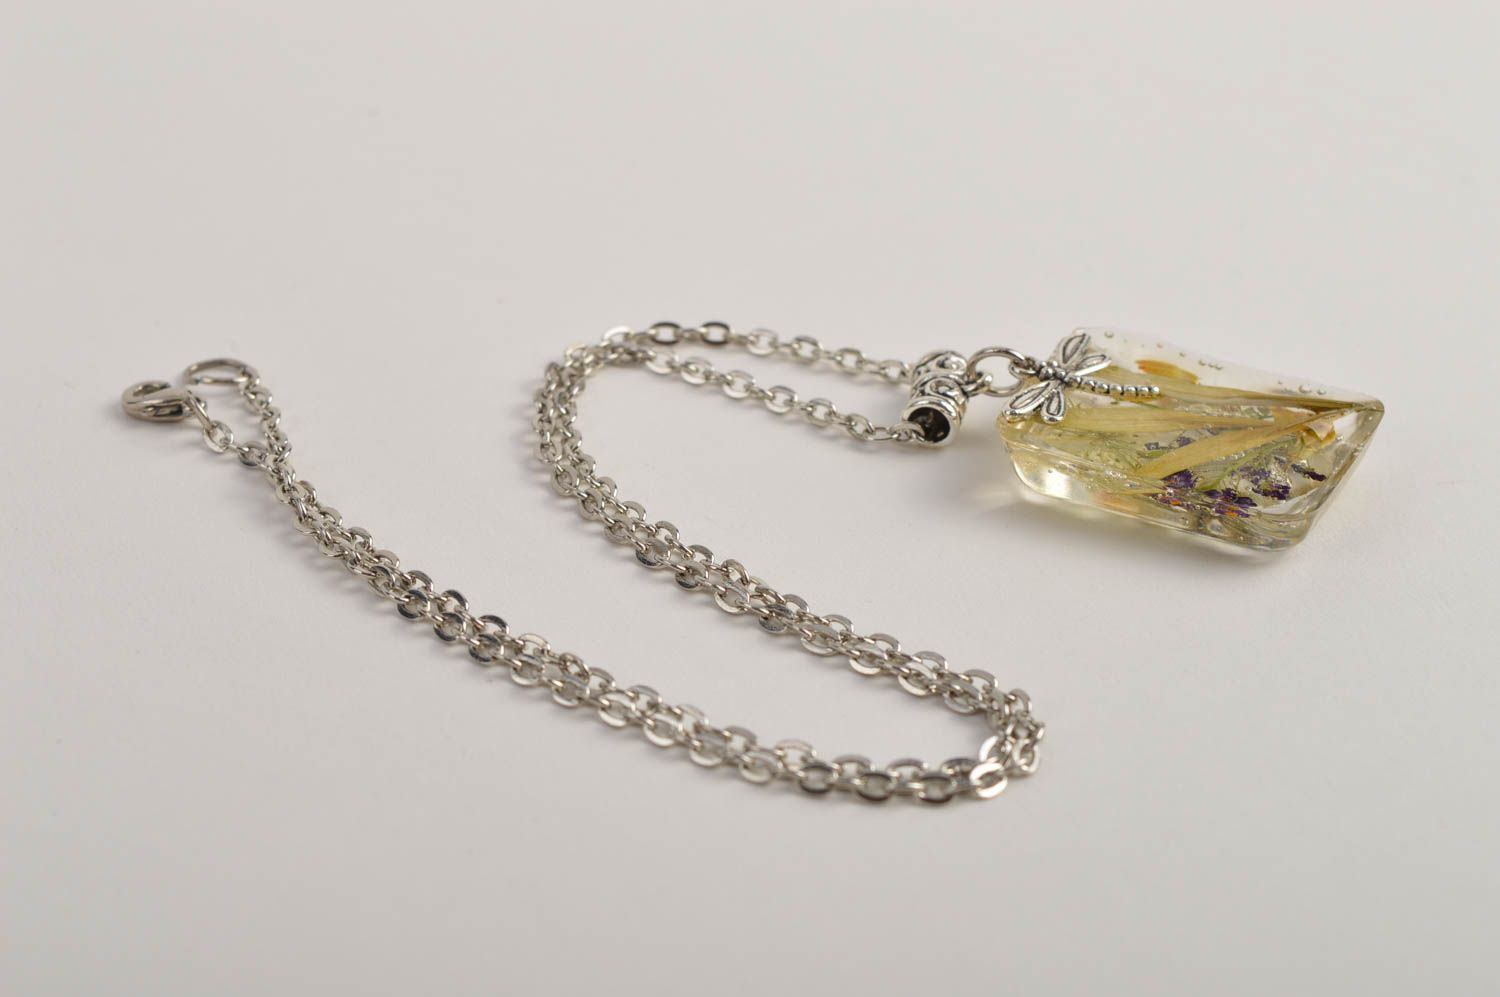 Handmade pendant unusual pendant designer accessory gift ideas resin jewelry photo 4